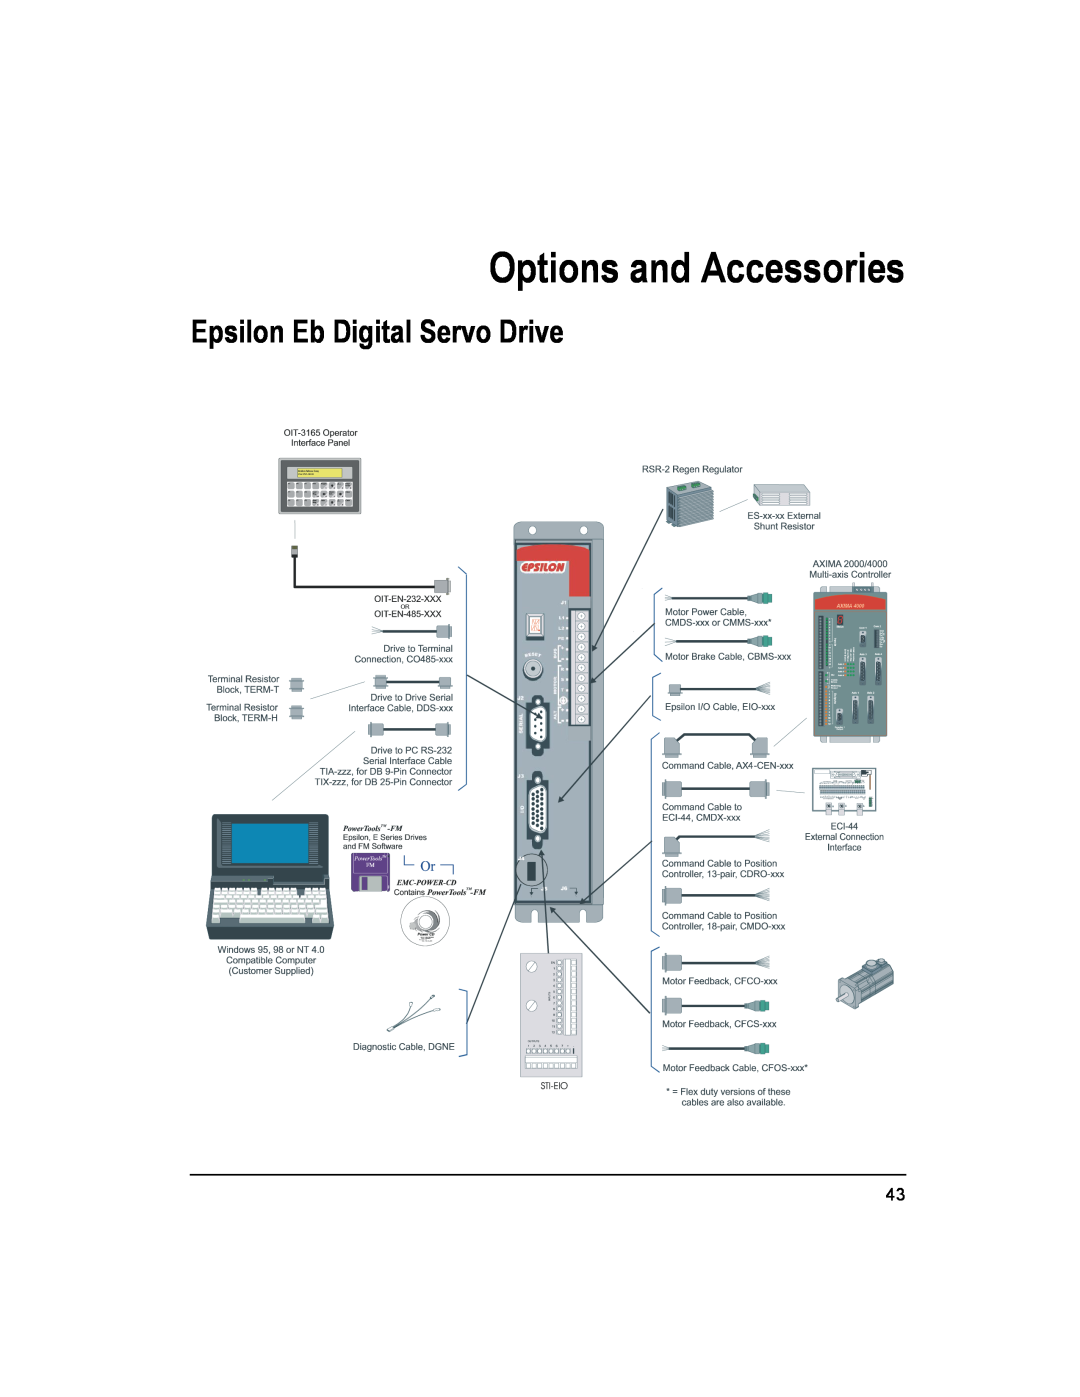 Emerson Epsilon Eb Digital Servo Drive, 400501-05 installation manual Options and Accessories 